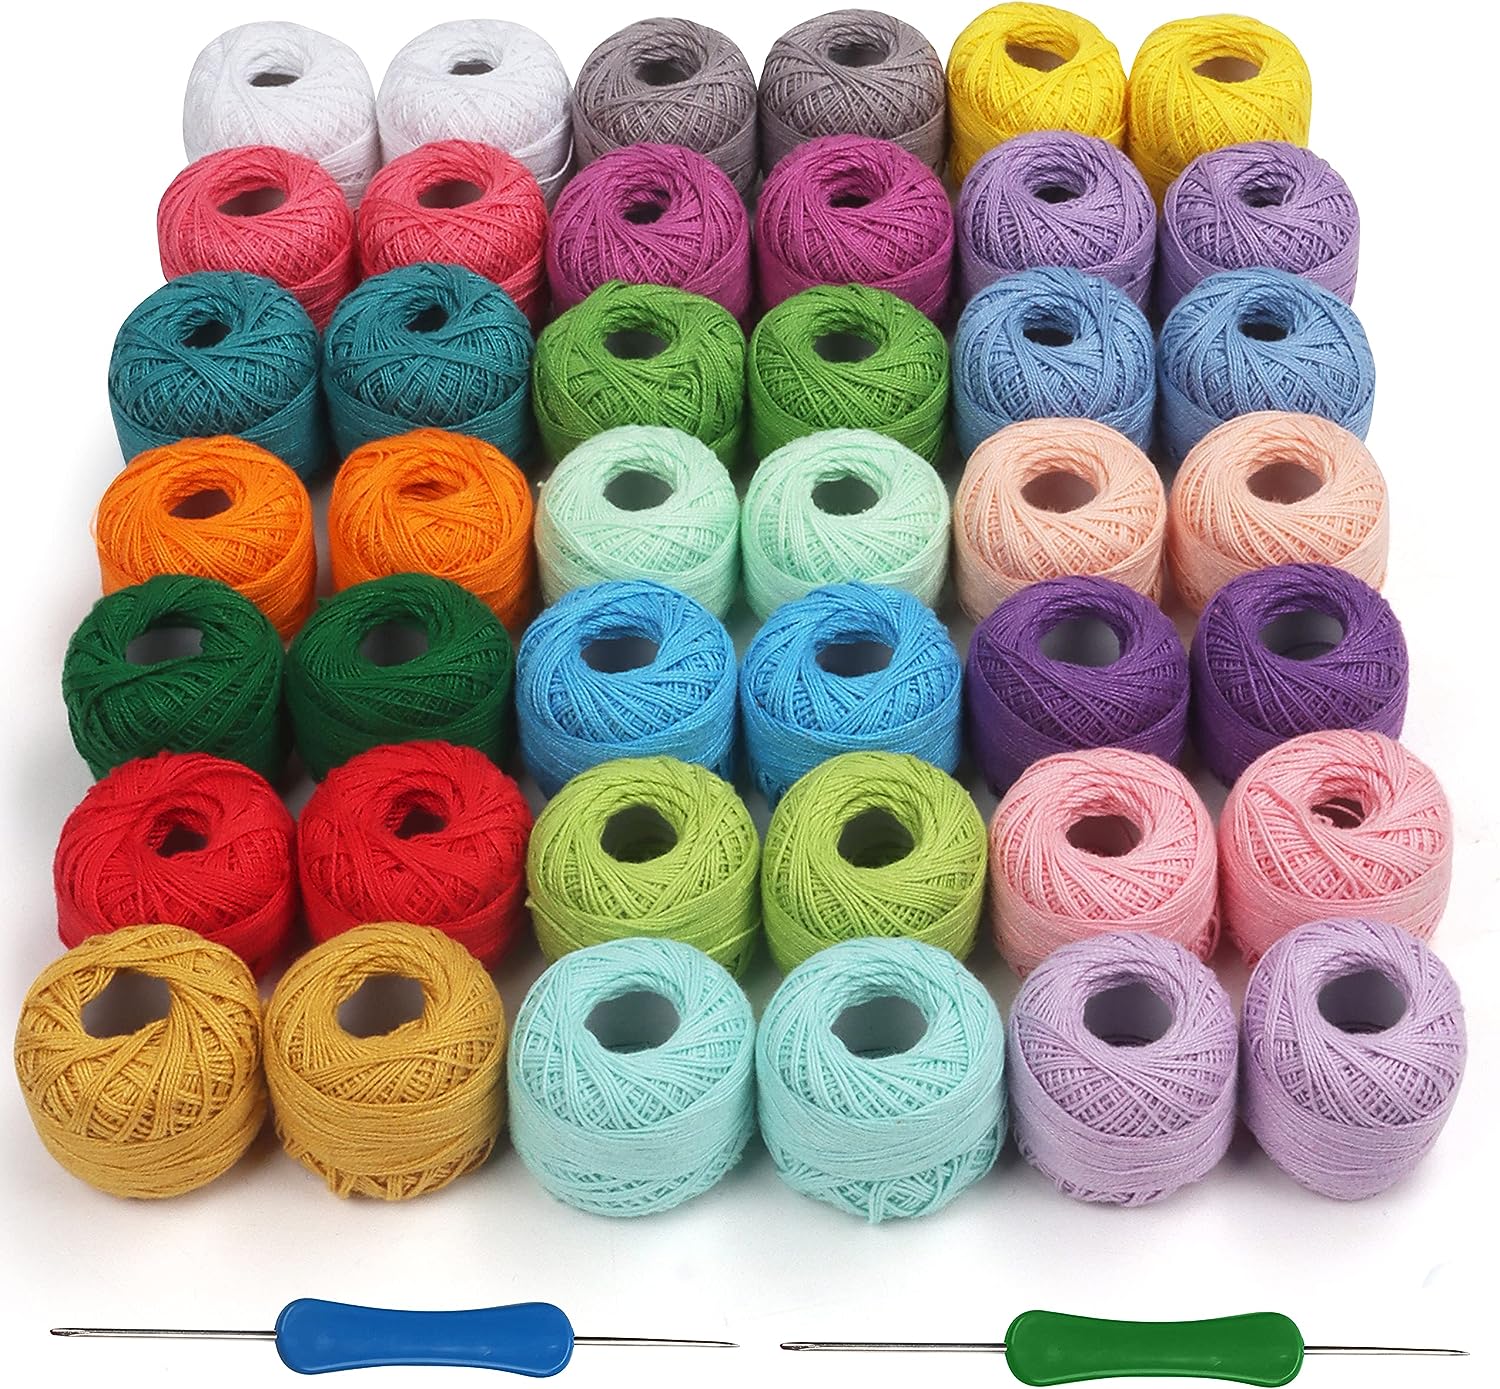 Colourful Crochet Yarn (42 Balls) - 2 Crochet Hooks Included (1mm & 2m –  RJP Unlimited